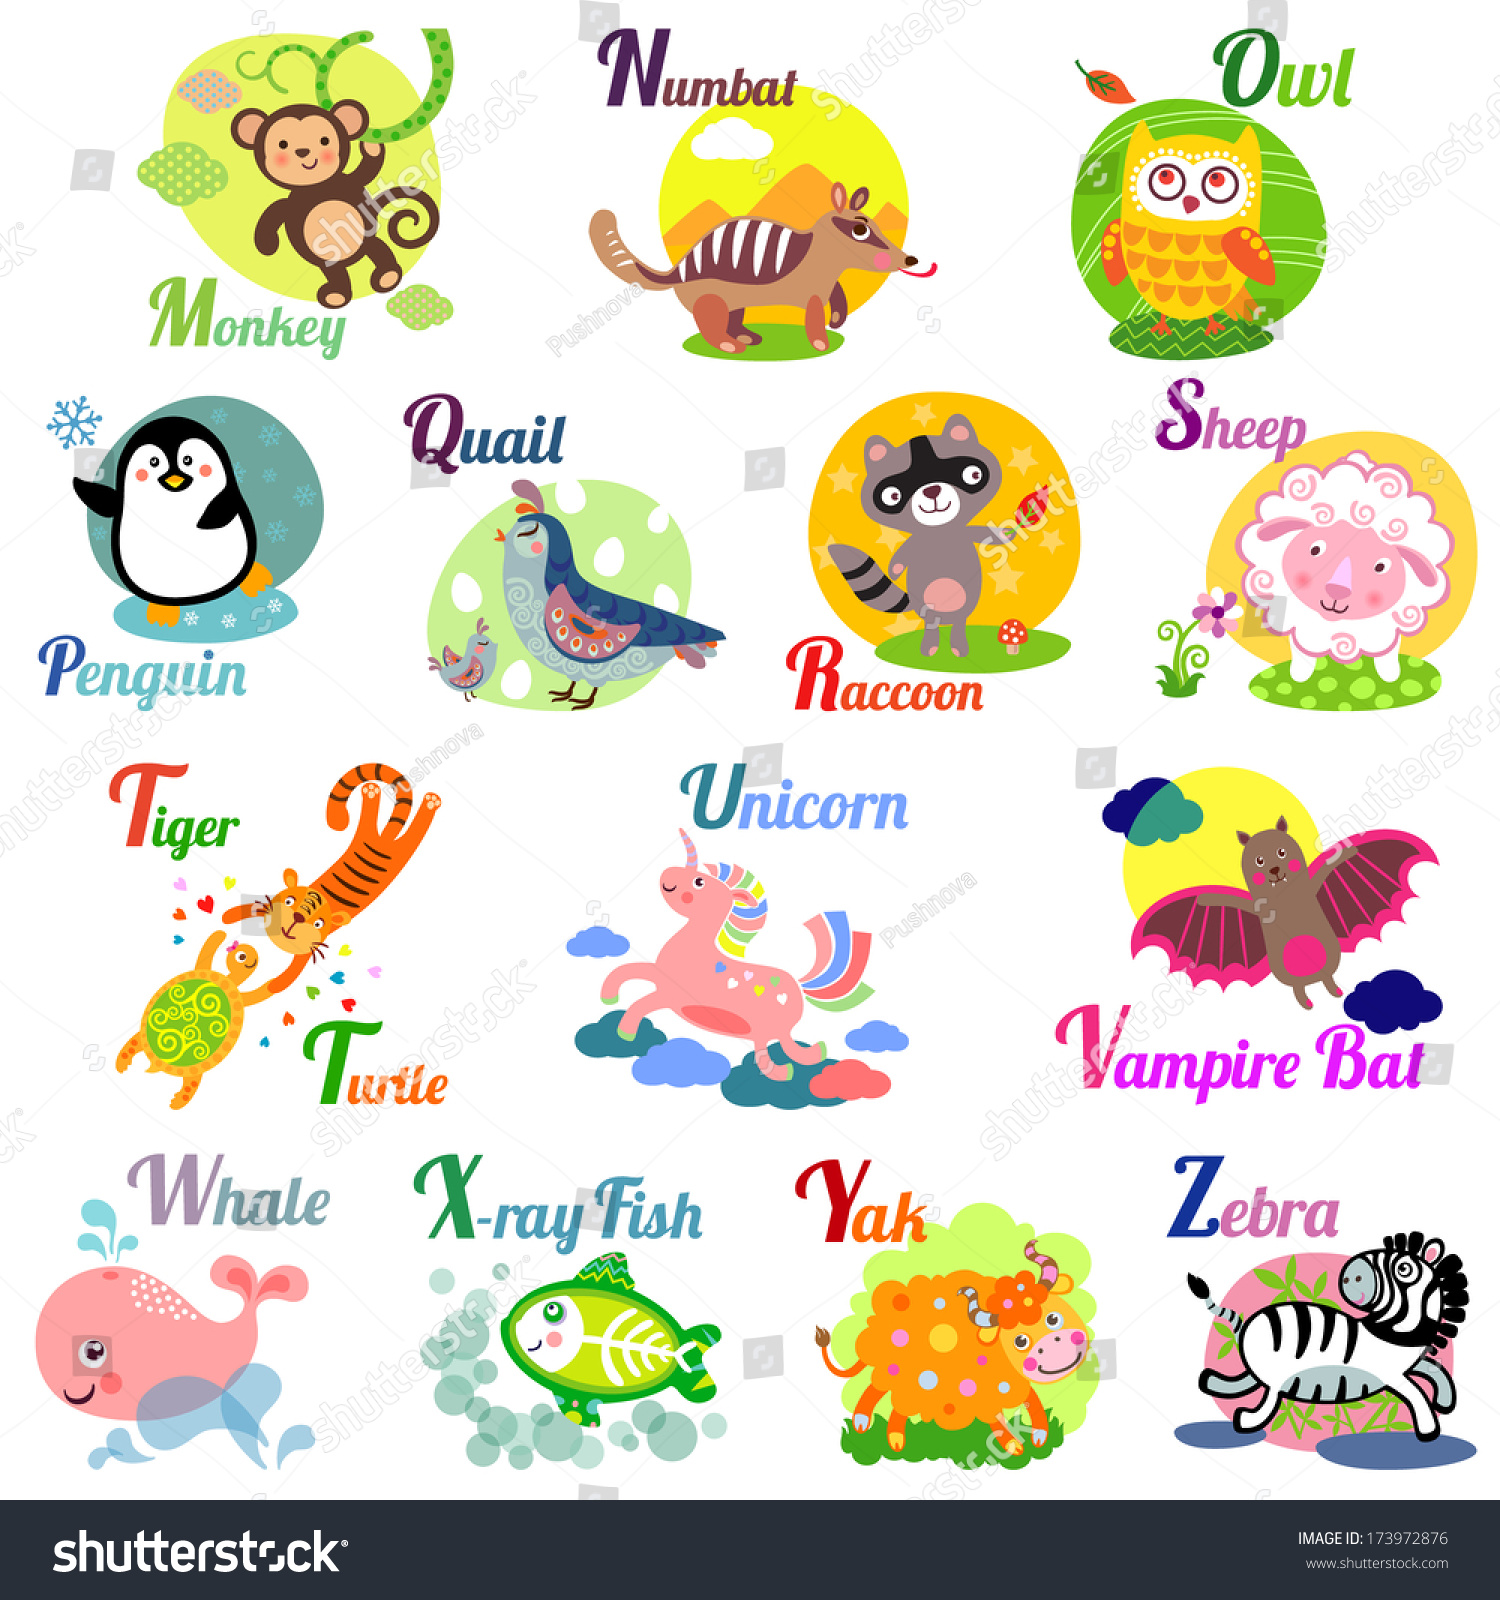 stock vector cute animal alphabet for abc book vector illustration of cartoon animals m n o p q r s t